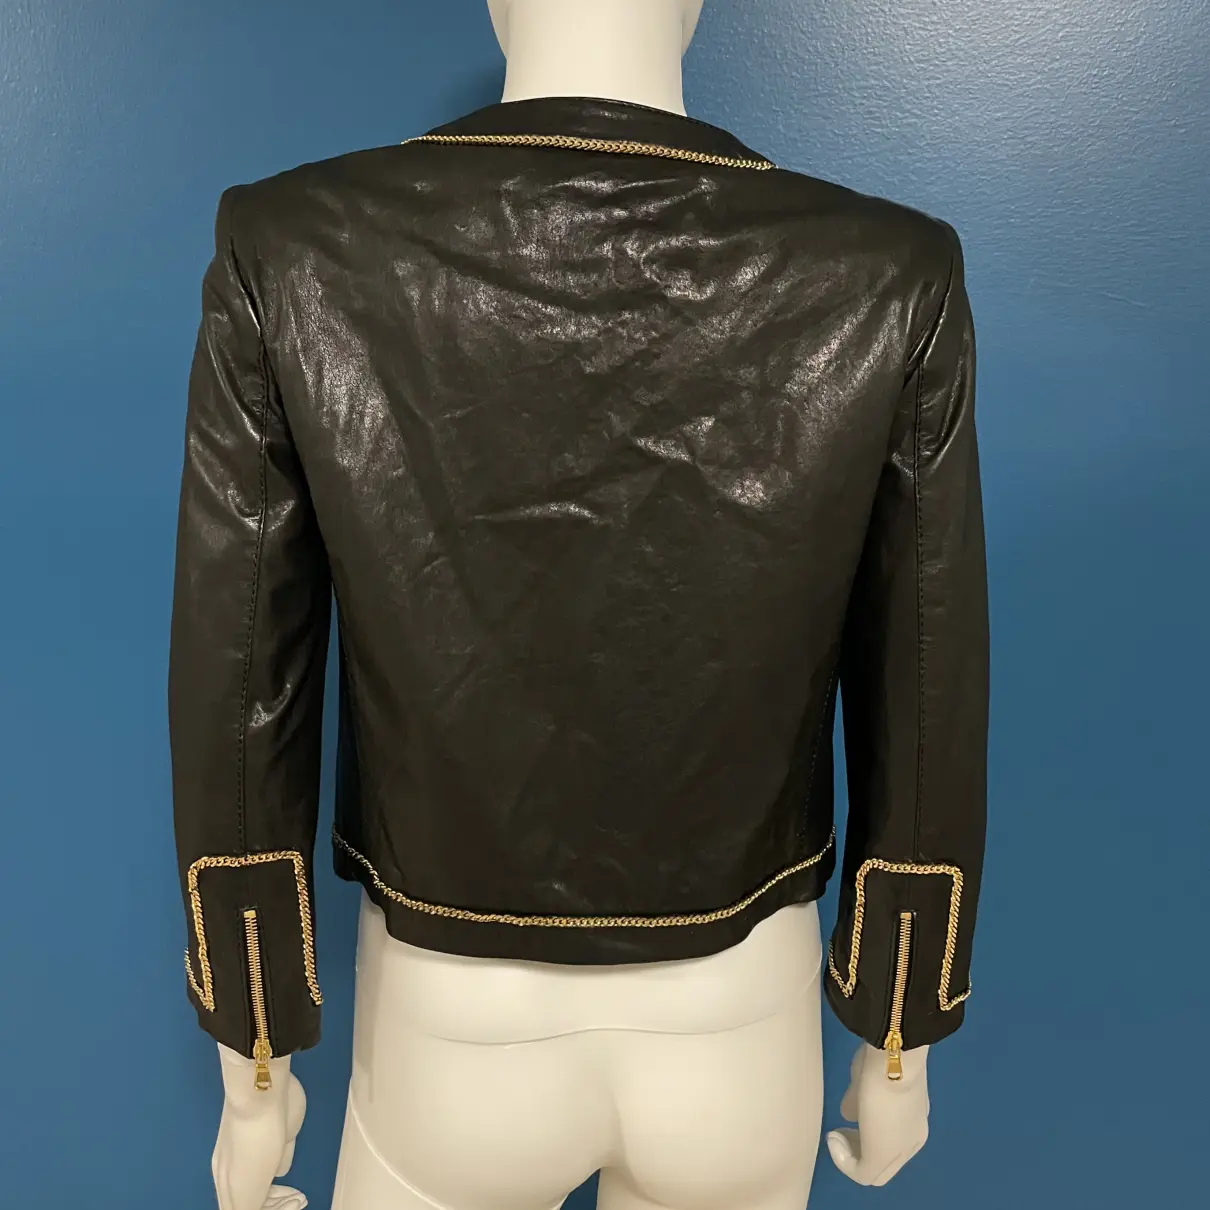 Buy Moschino Leather short vest online - Vintage